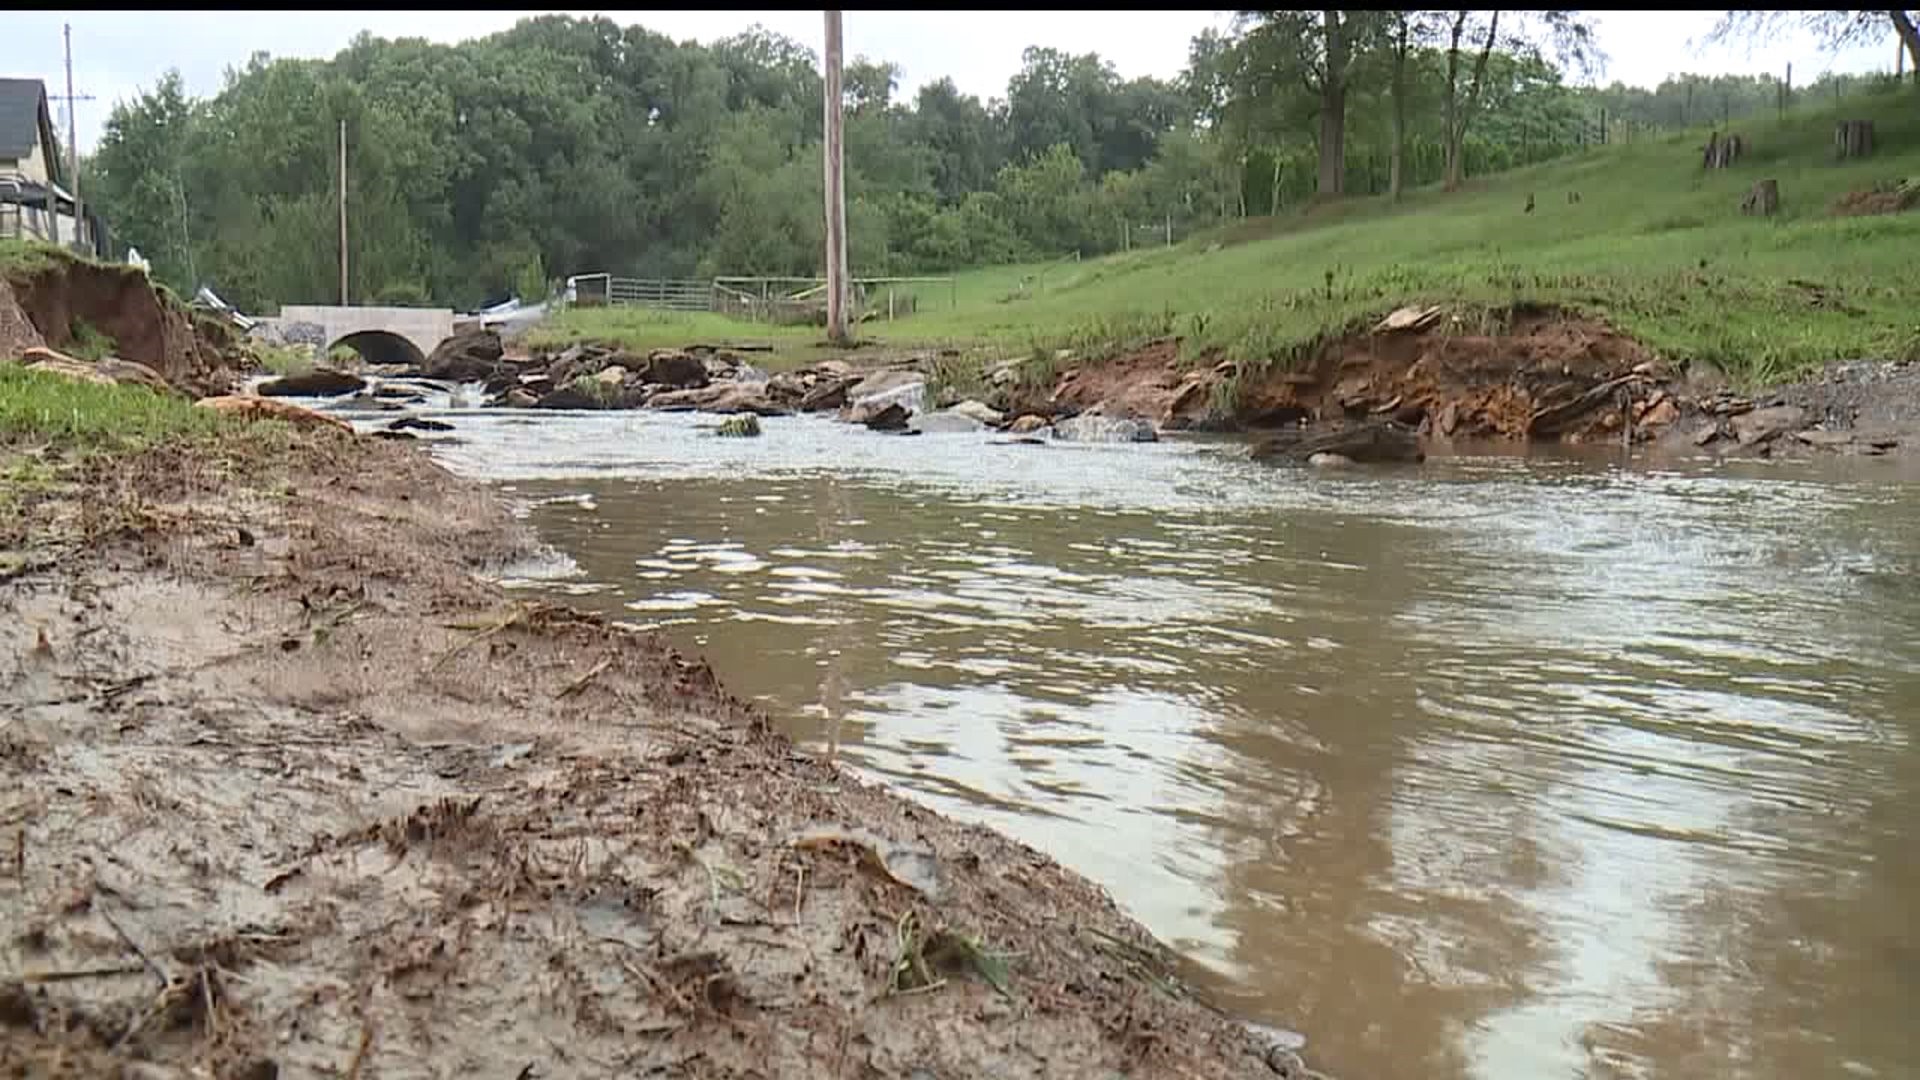 Roads still closed in York County following flash flooding